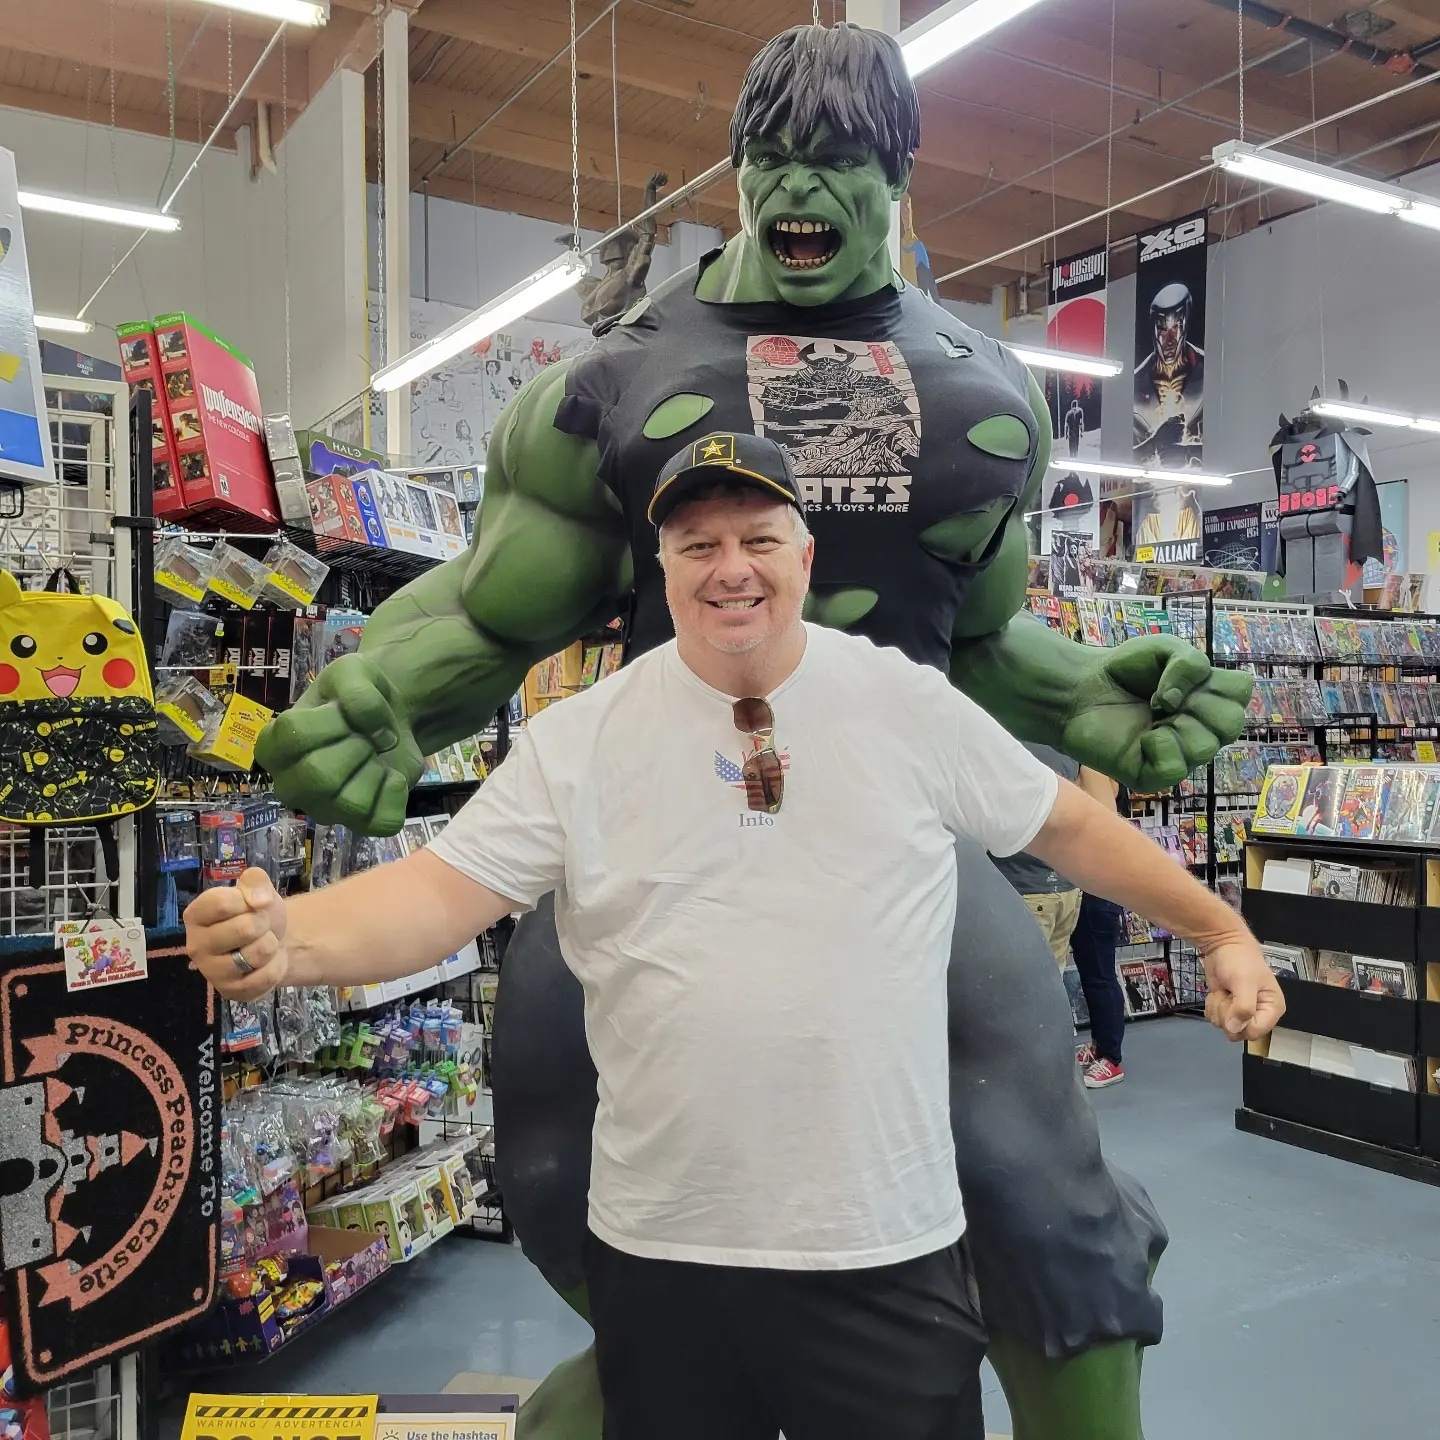 Bill and the Incredible Hulk